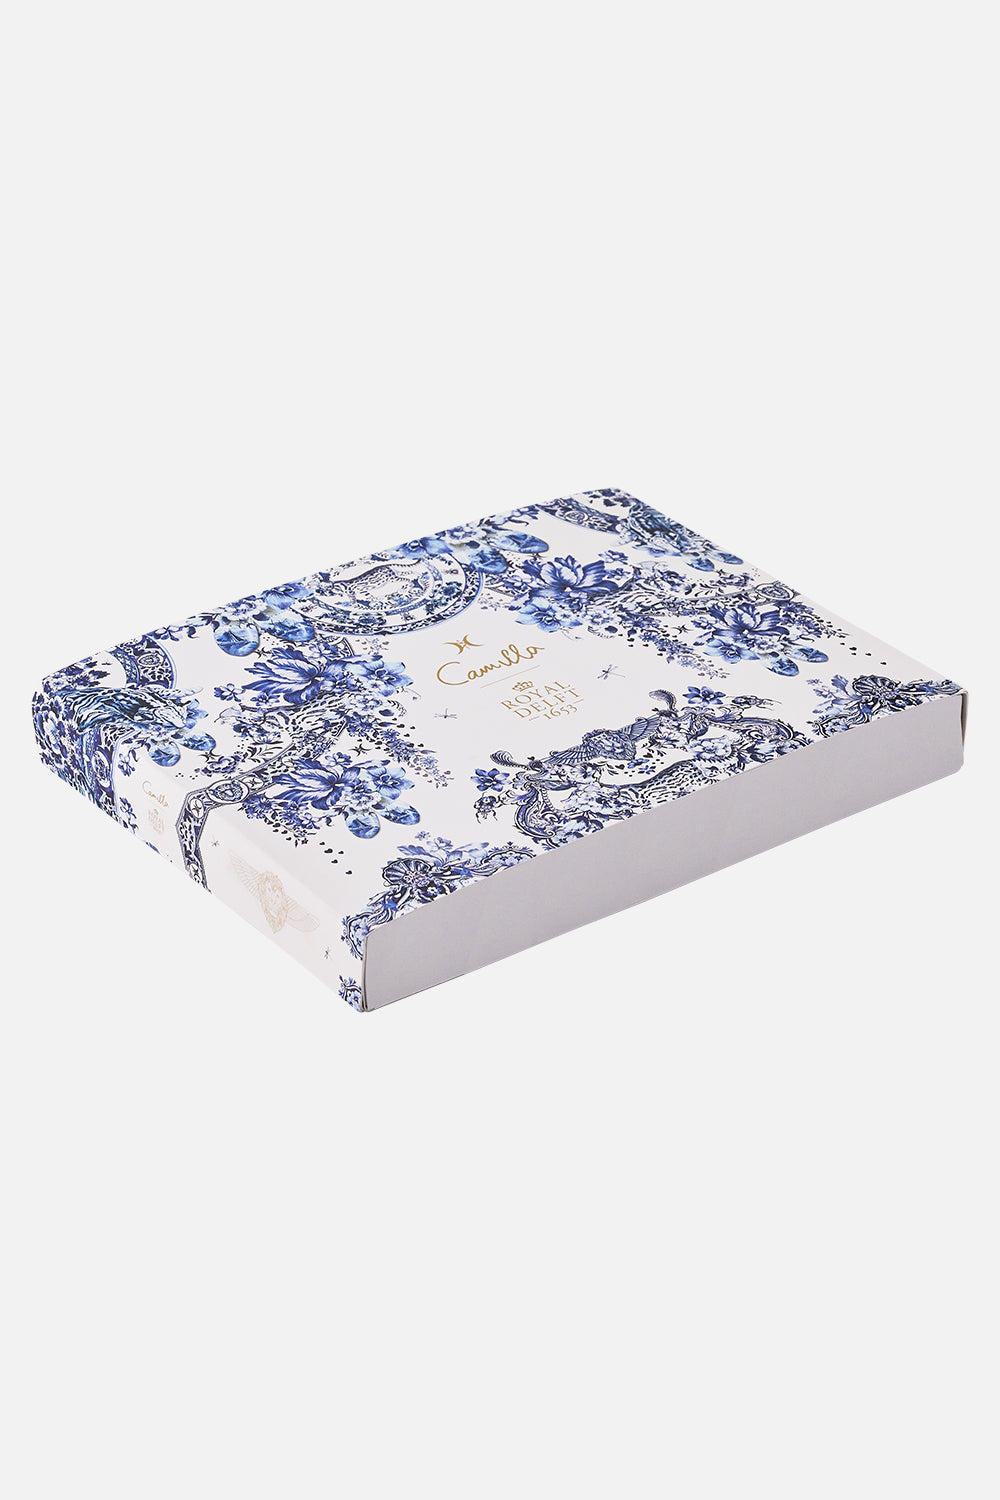 CAMILLA blue and white ceramic wall plate in Glaze and Graze print